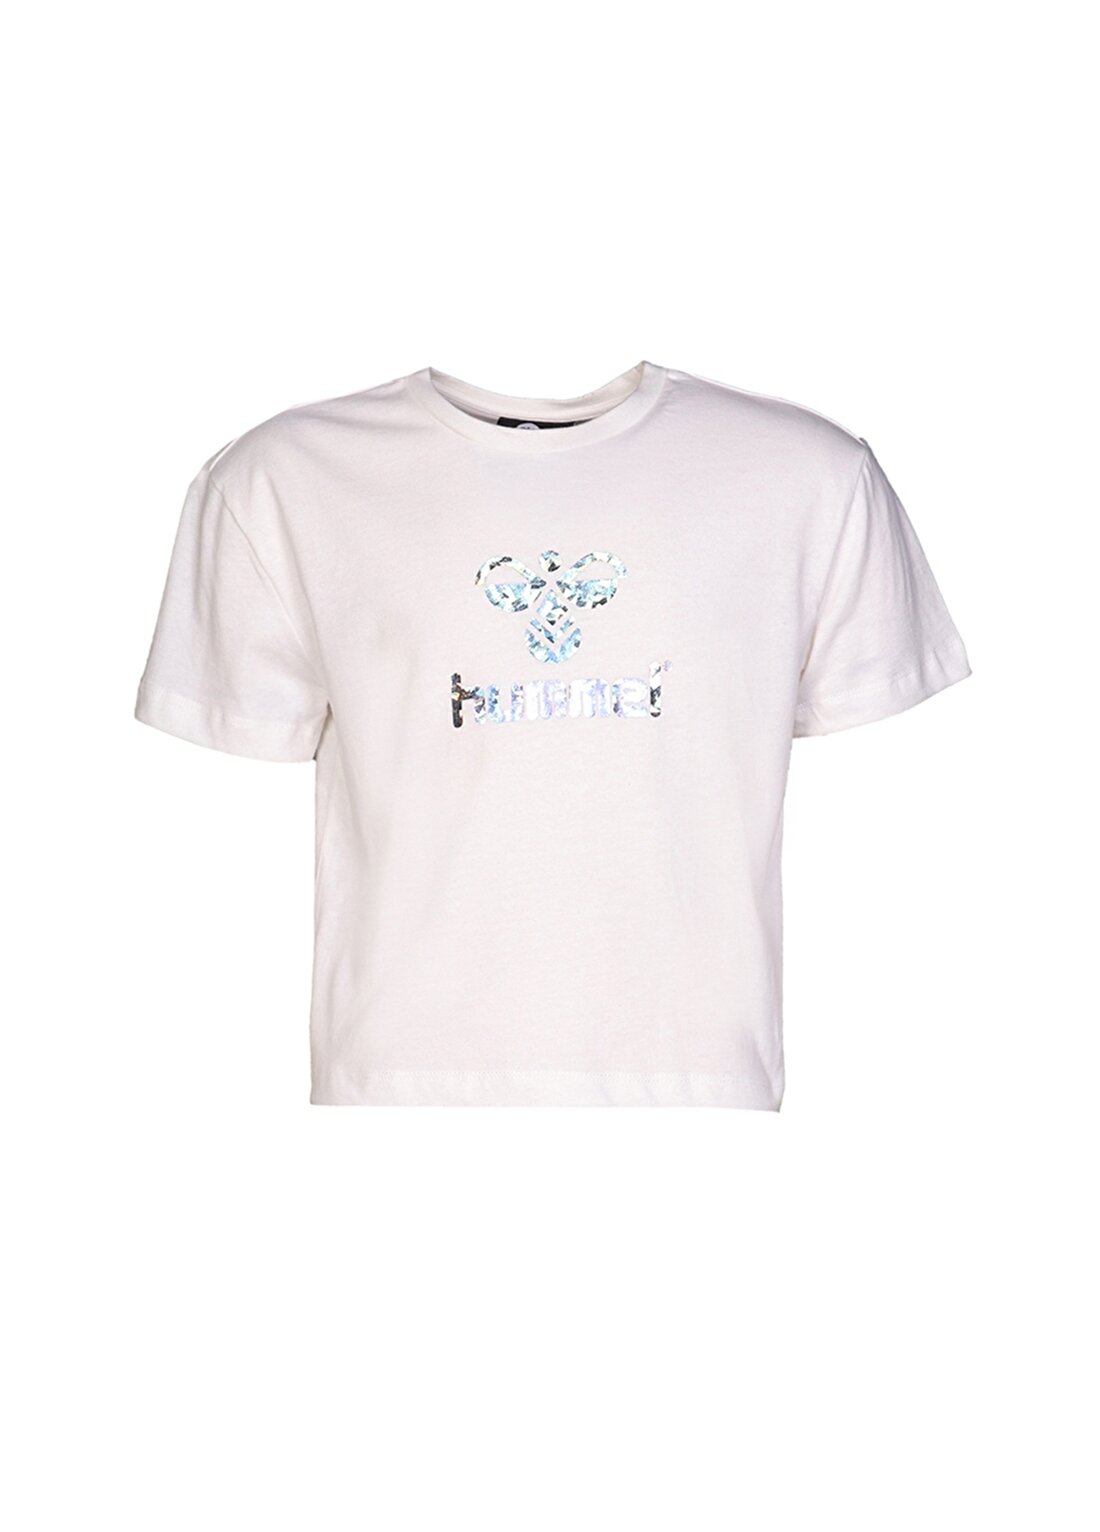 Hummel FRIDA T-SHIRT S/S TEE Beyaz Kız Çocuk T-Shirt 910910-9003